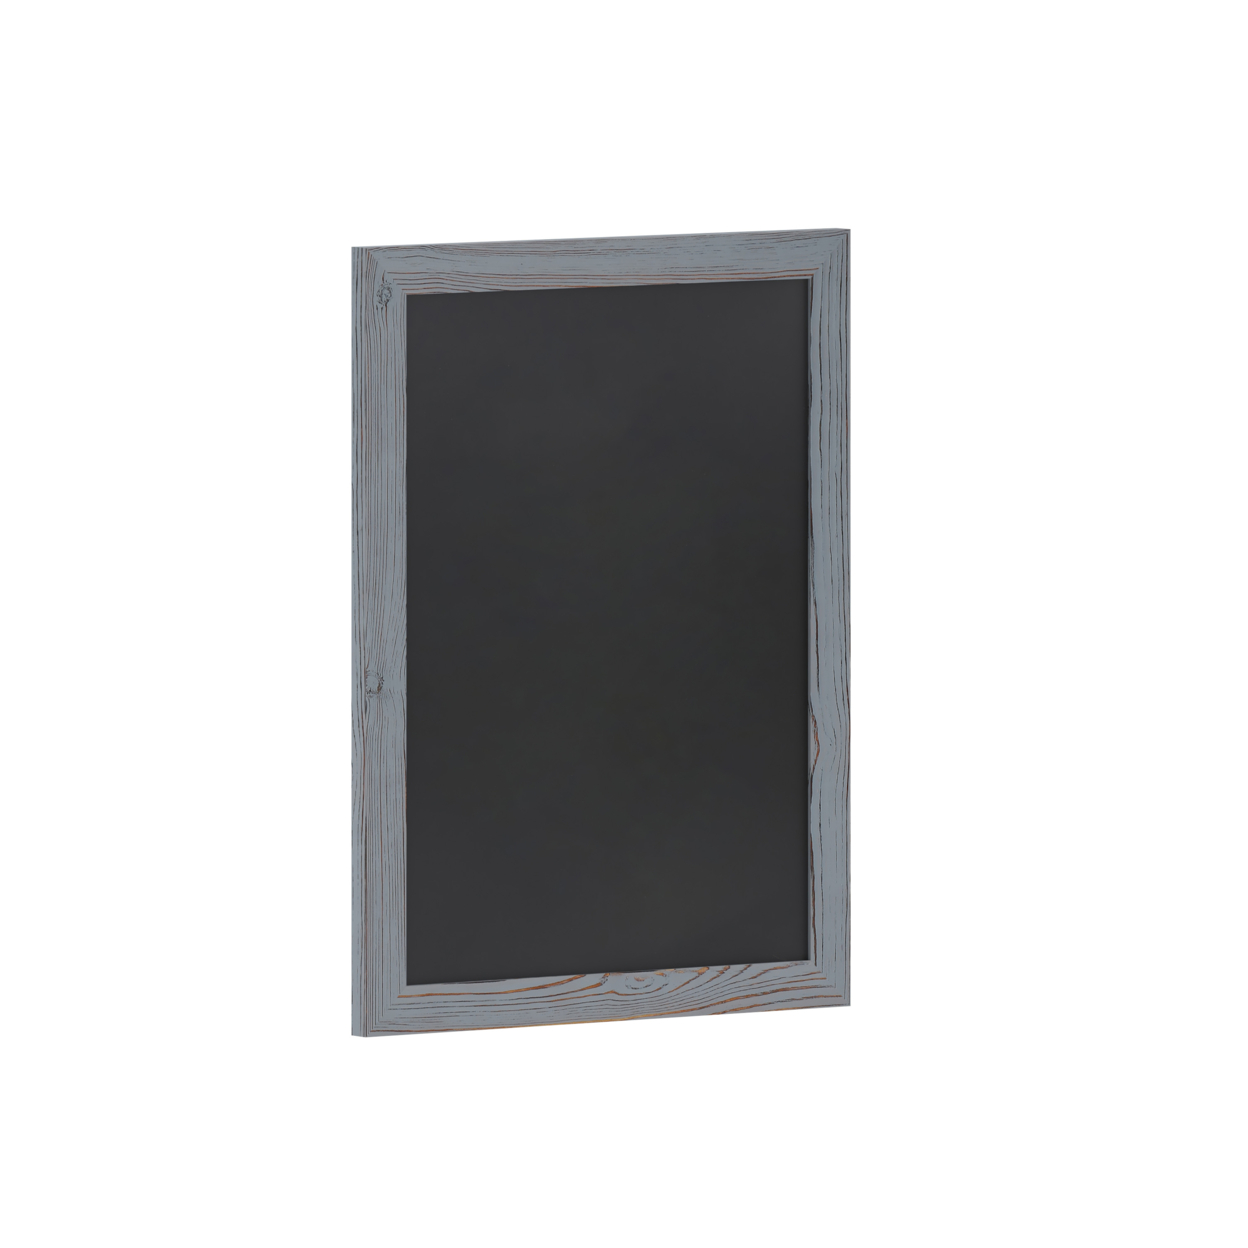 30 Inch Wall Hanging Chalkboard, Sleek Rustic Gray Wood Frame, Eraser